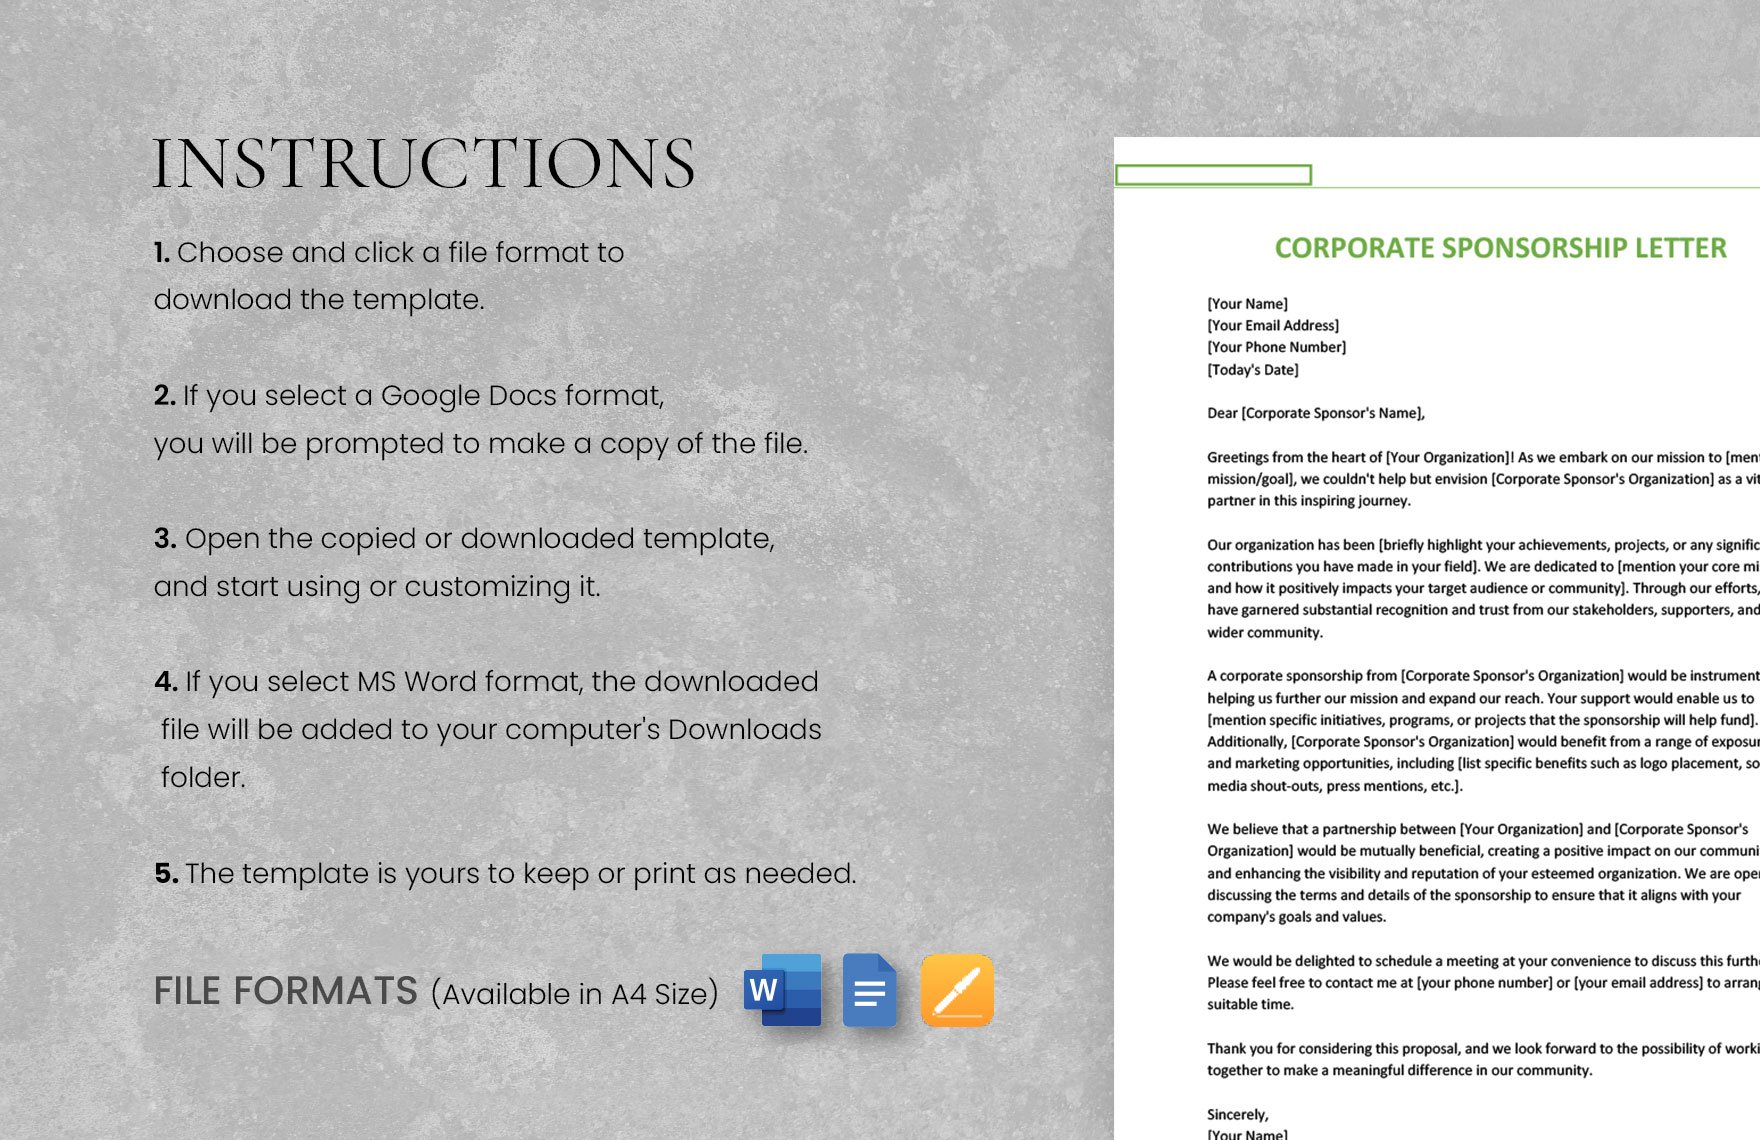 Corporate Sponsorship Letter